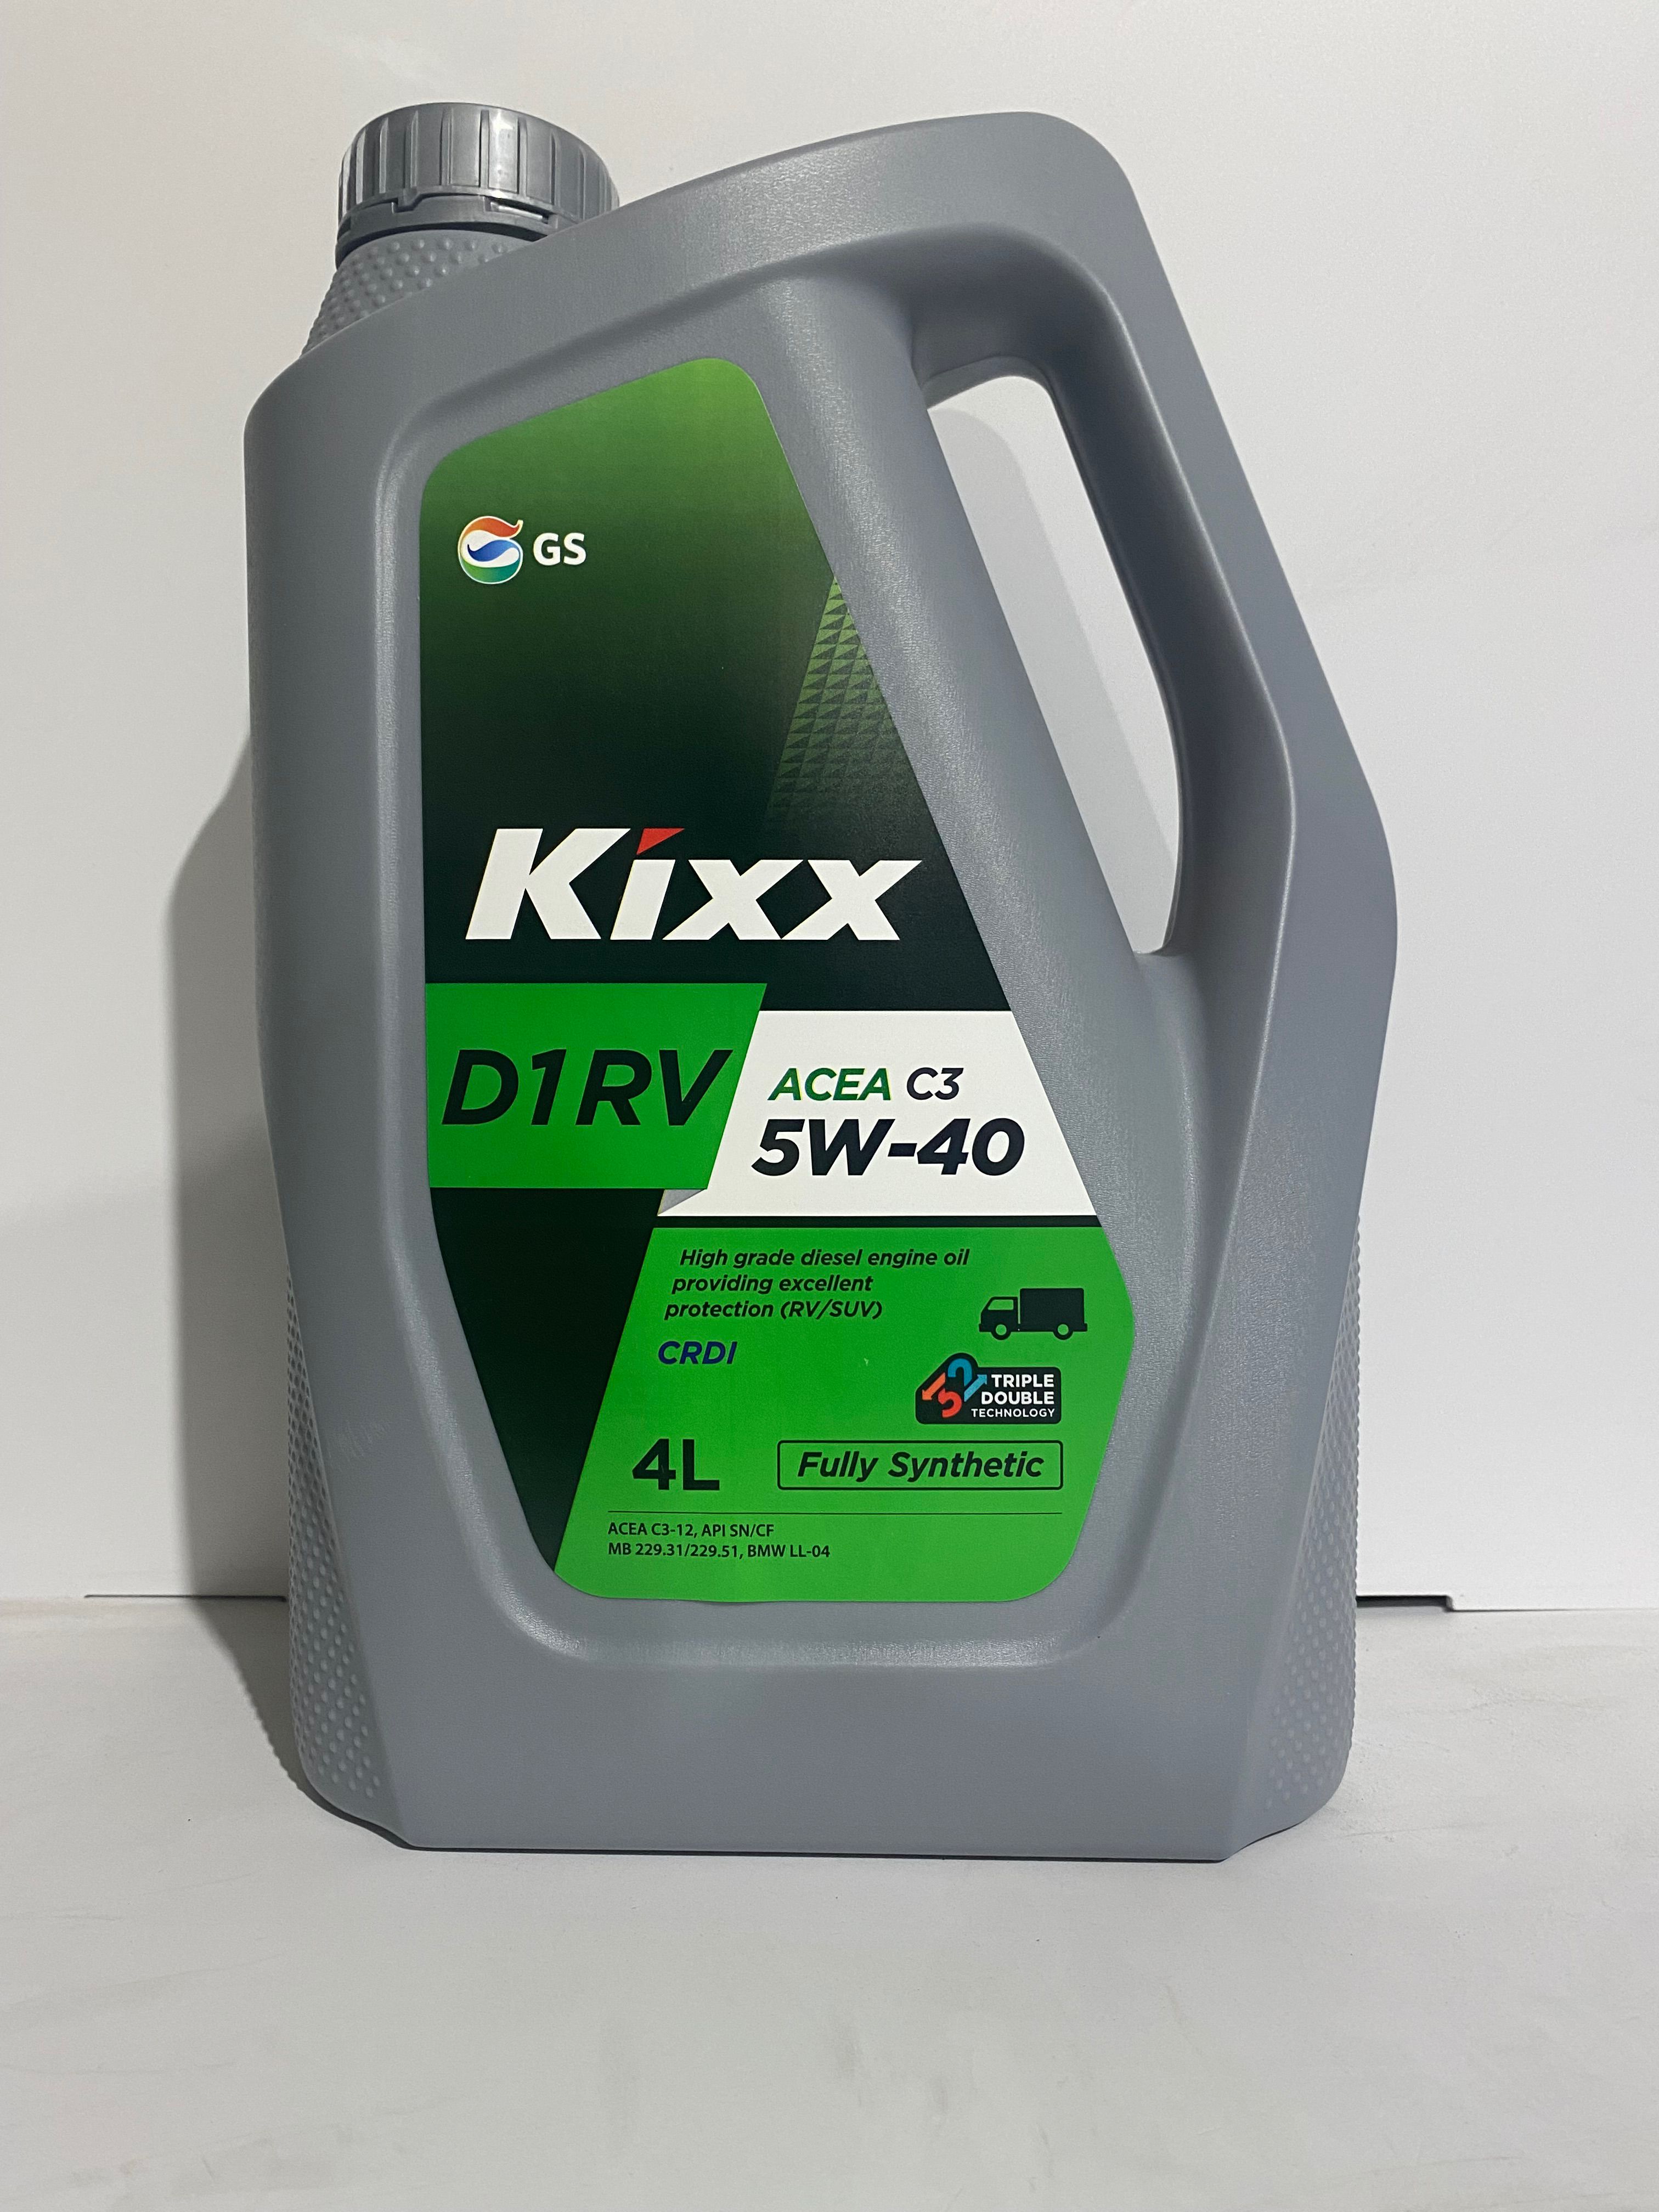 Kixx 5w40 отзывы. Kixx 5w40. Kixx d1 RV 5w-40. Kixx d1 RV как проверить.